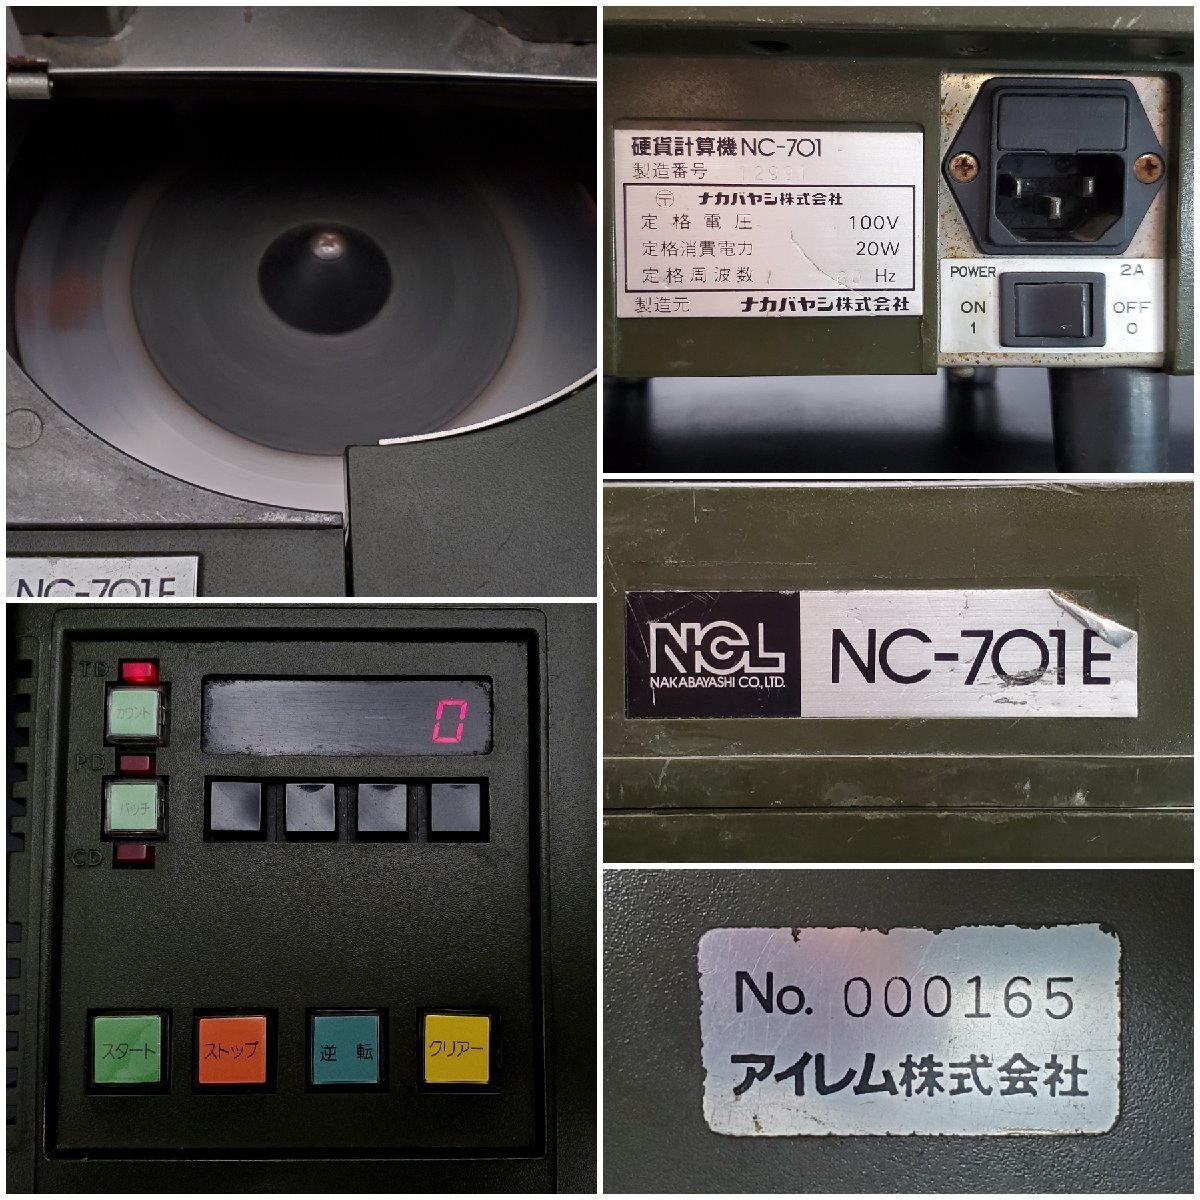 [. warehouse ]NCLna hippopotamus cocos nucifera corporation coin count machine NC-701 coin counter simple operation verification settled present condition goods ①